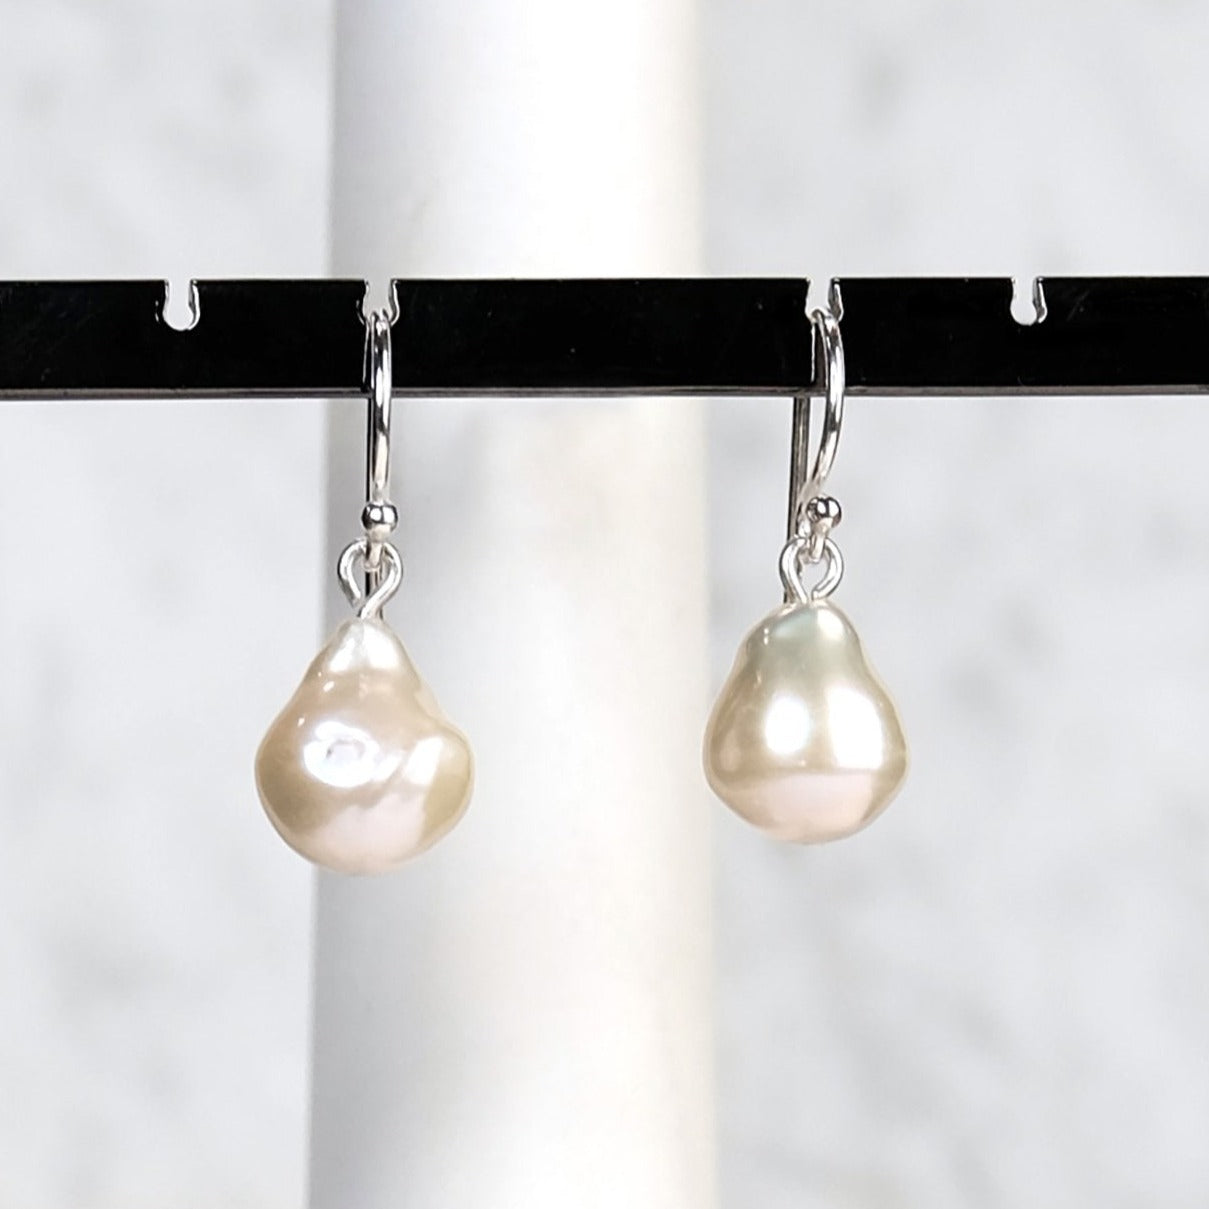 The Madstone pearl earrings